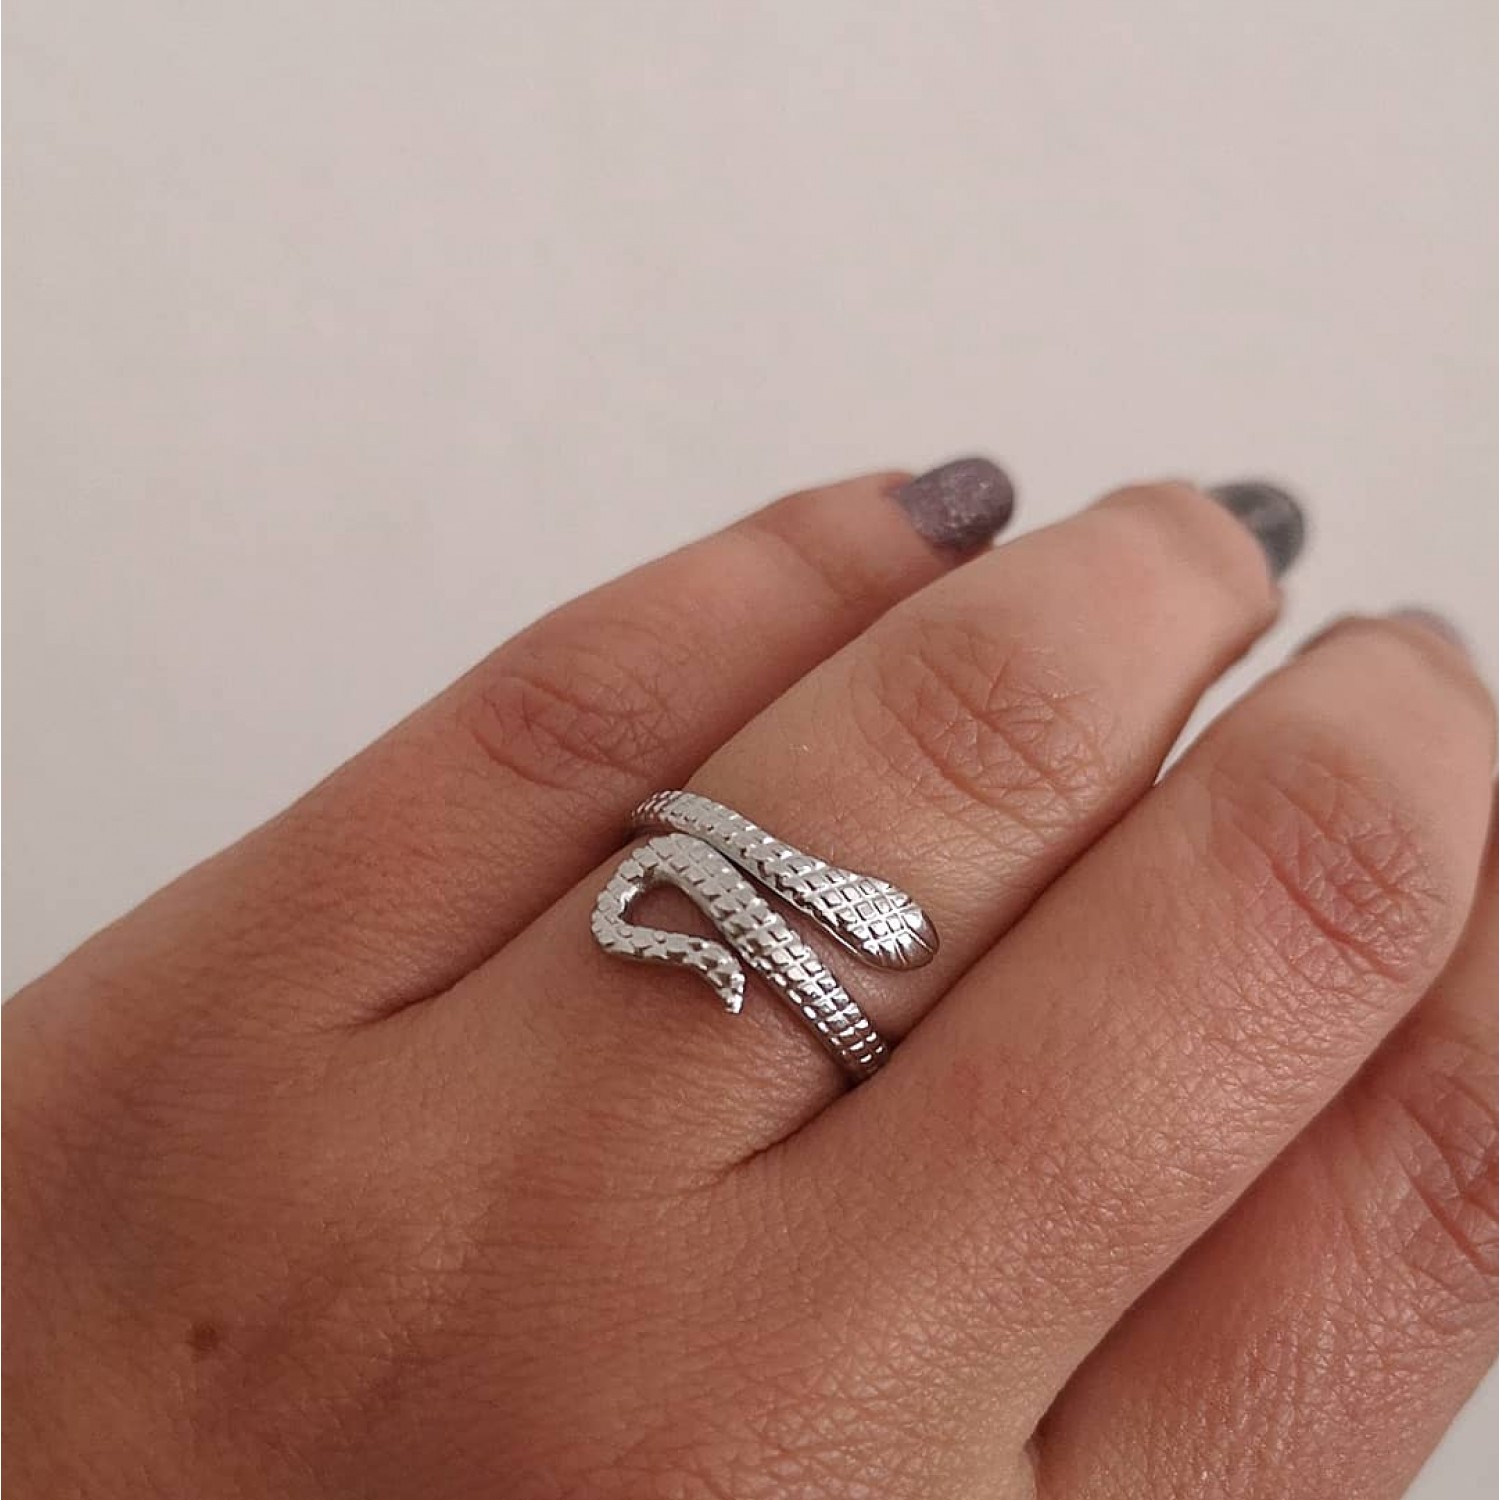 STAINLESS STEEL δαχτυλίδι ανοιγόμενο φίδι ασημί.